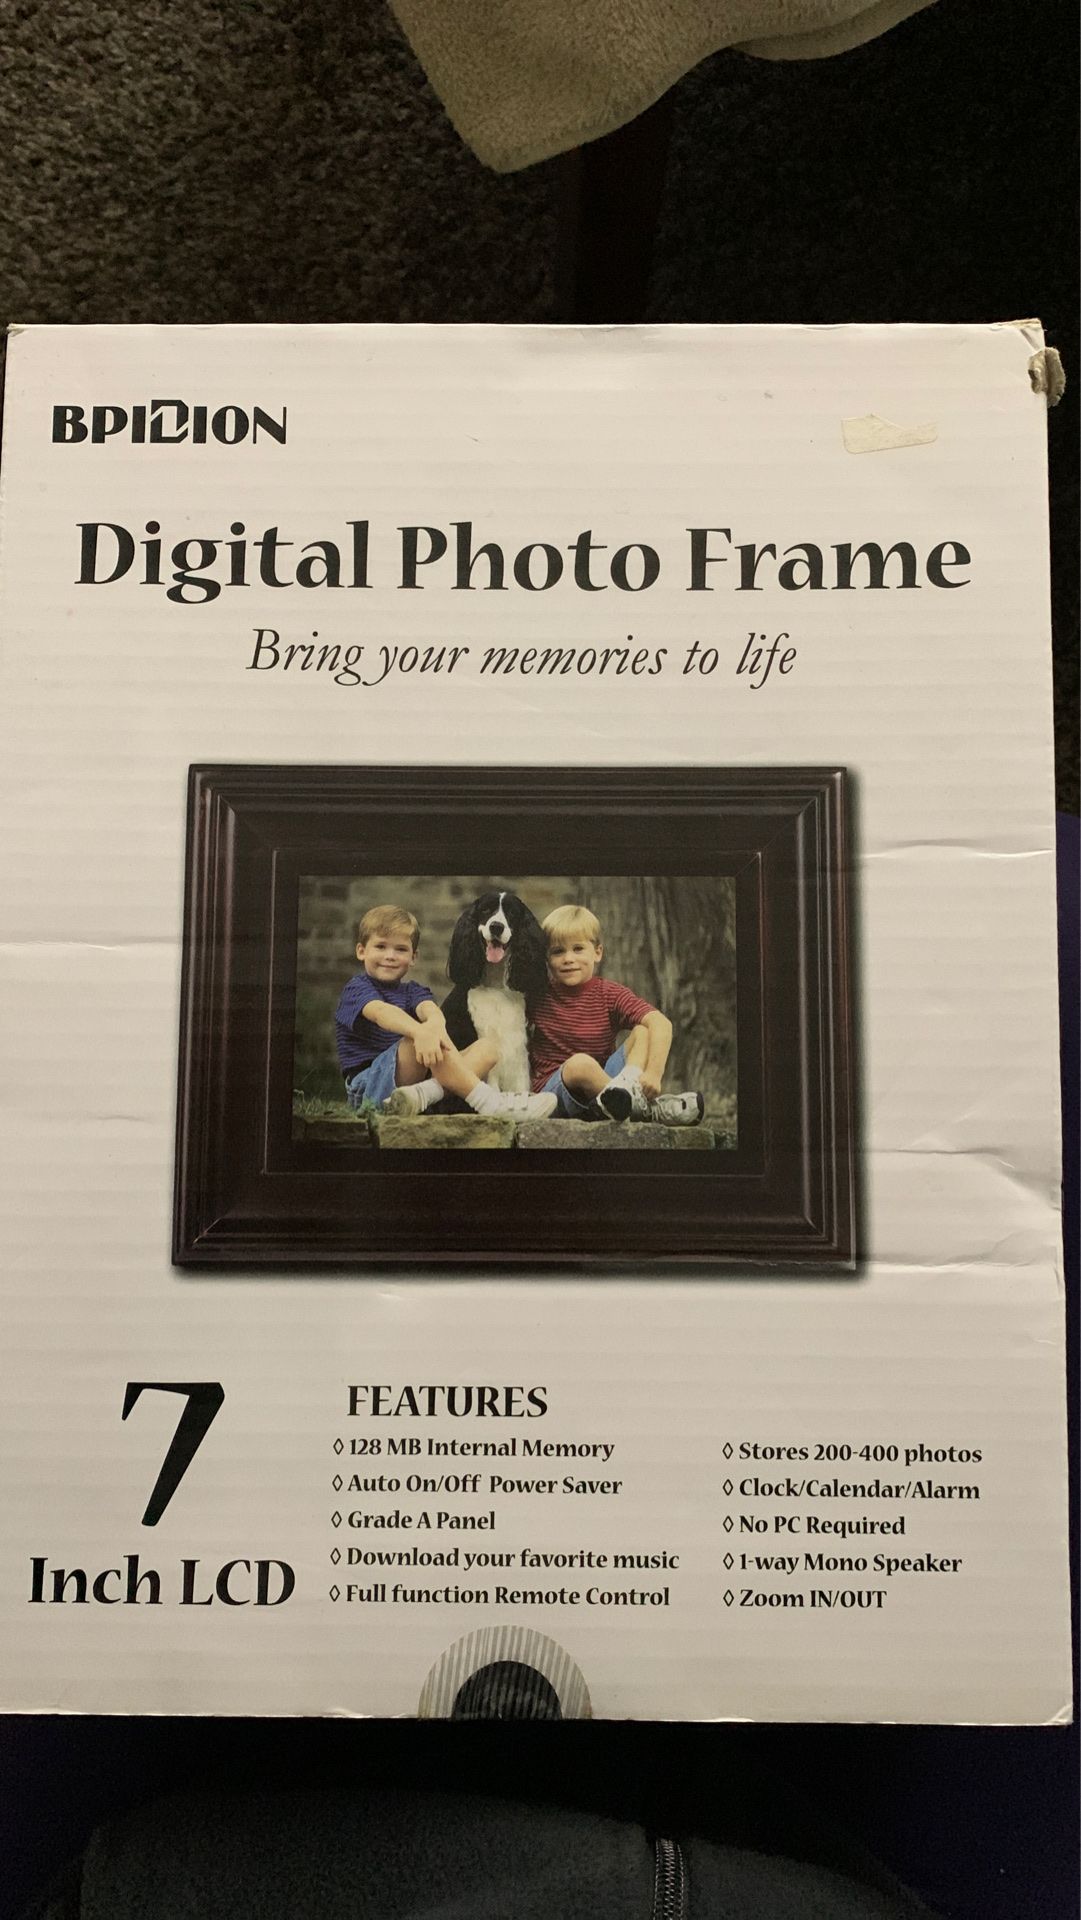 New digital photo frame